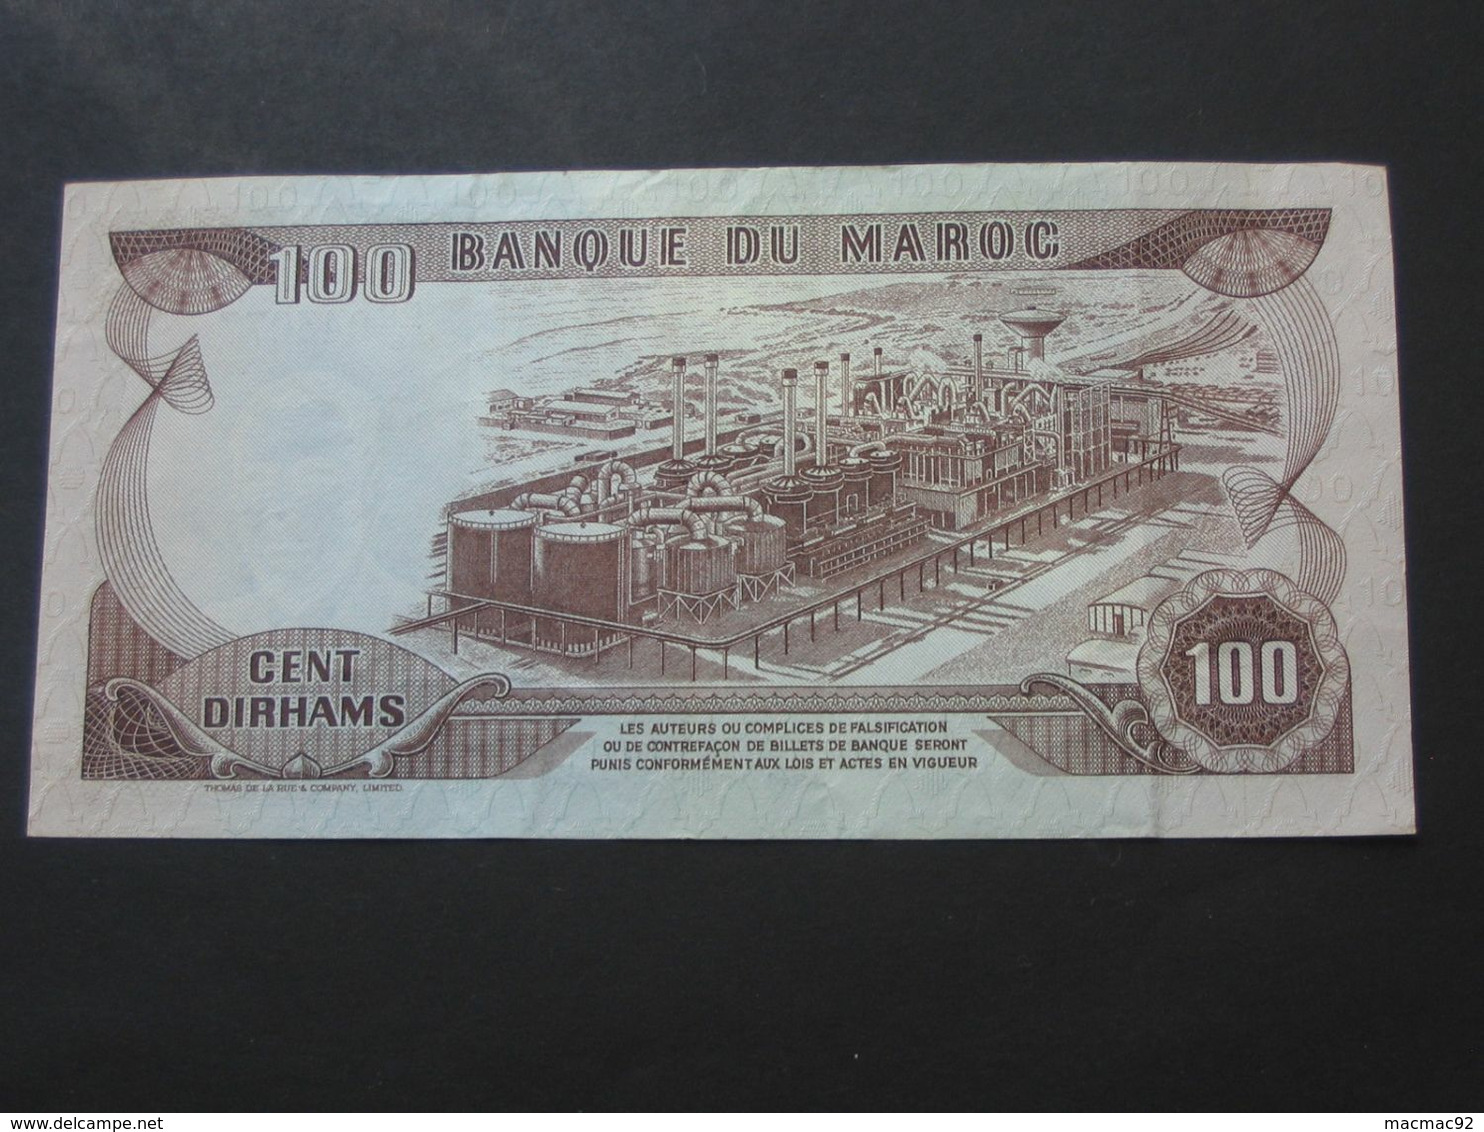 100 Dirhams 1970-1390 Maroc - Banque Du Maroc   **** EN ACHAT IMMEDIAT **** - Morocco